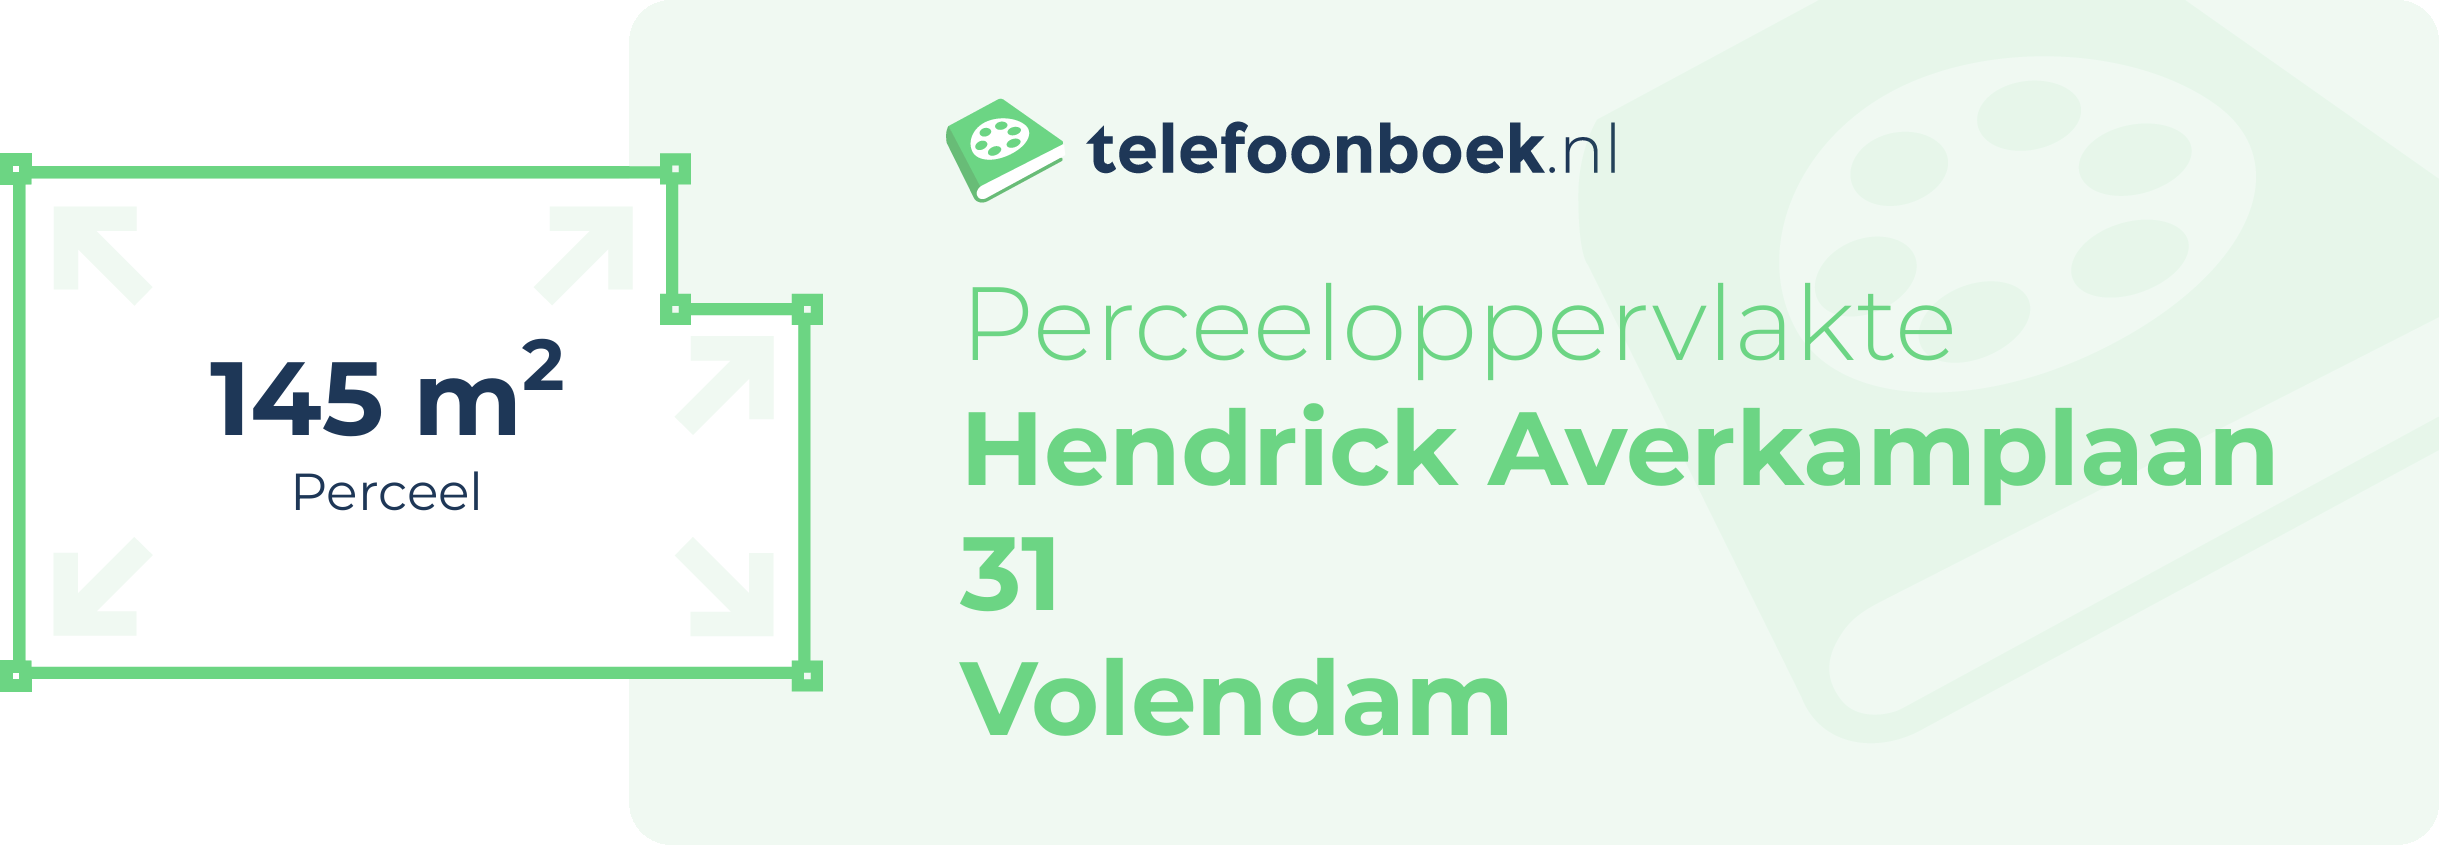 Perceeloppervlakte Hendrick Averkamplaan 31 Volendam